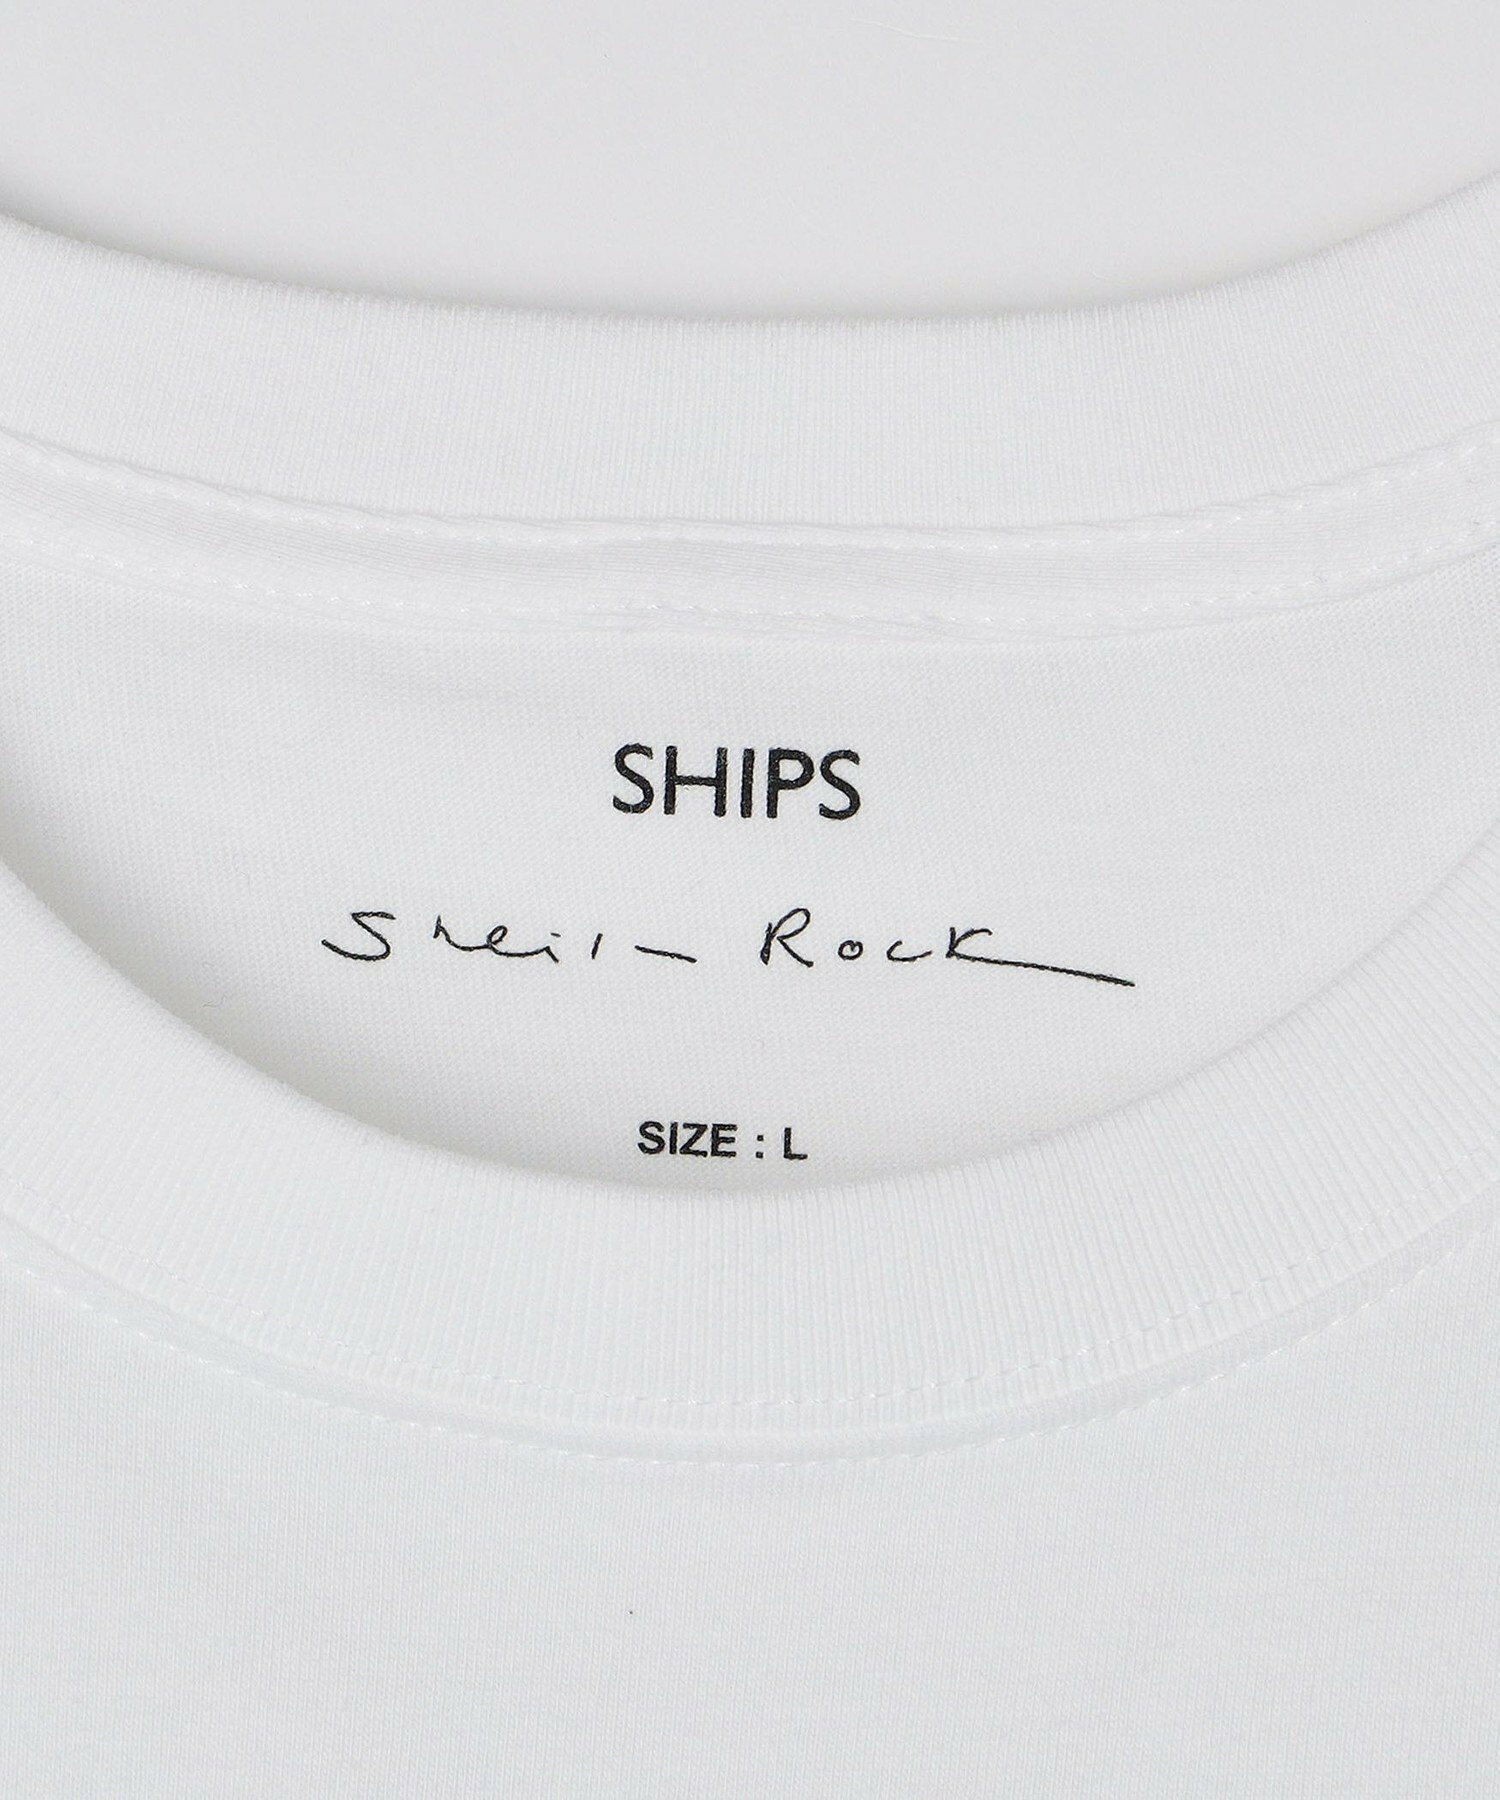 SHIPS: Sheila Rock HOTEL フォト プリント Tシャツ